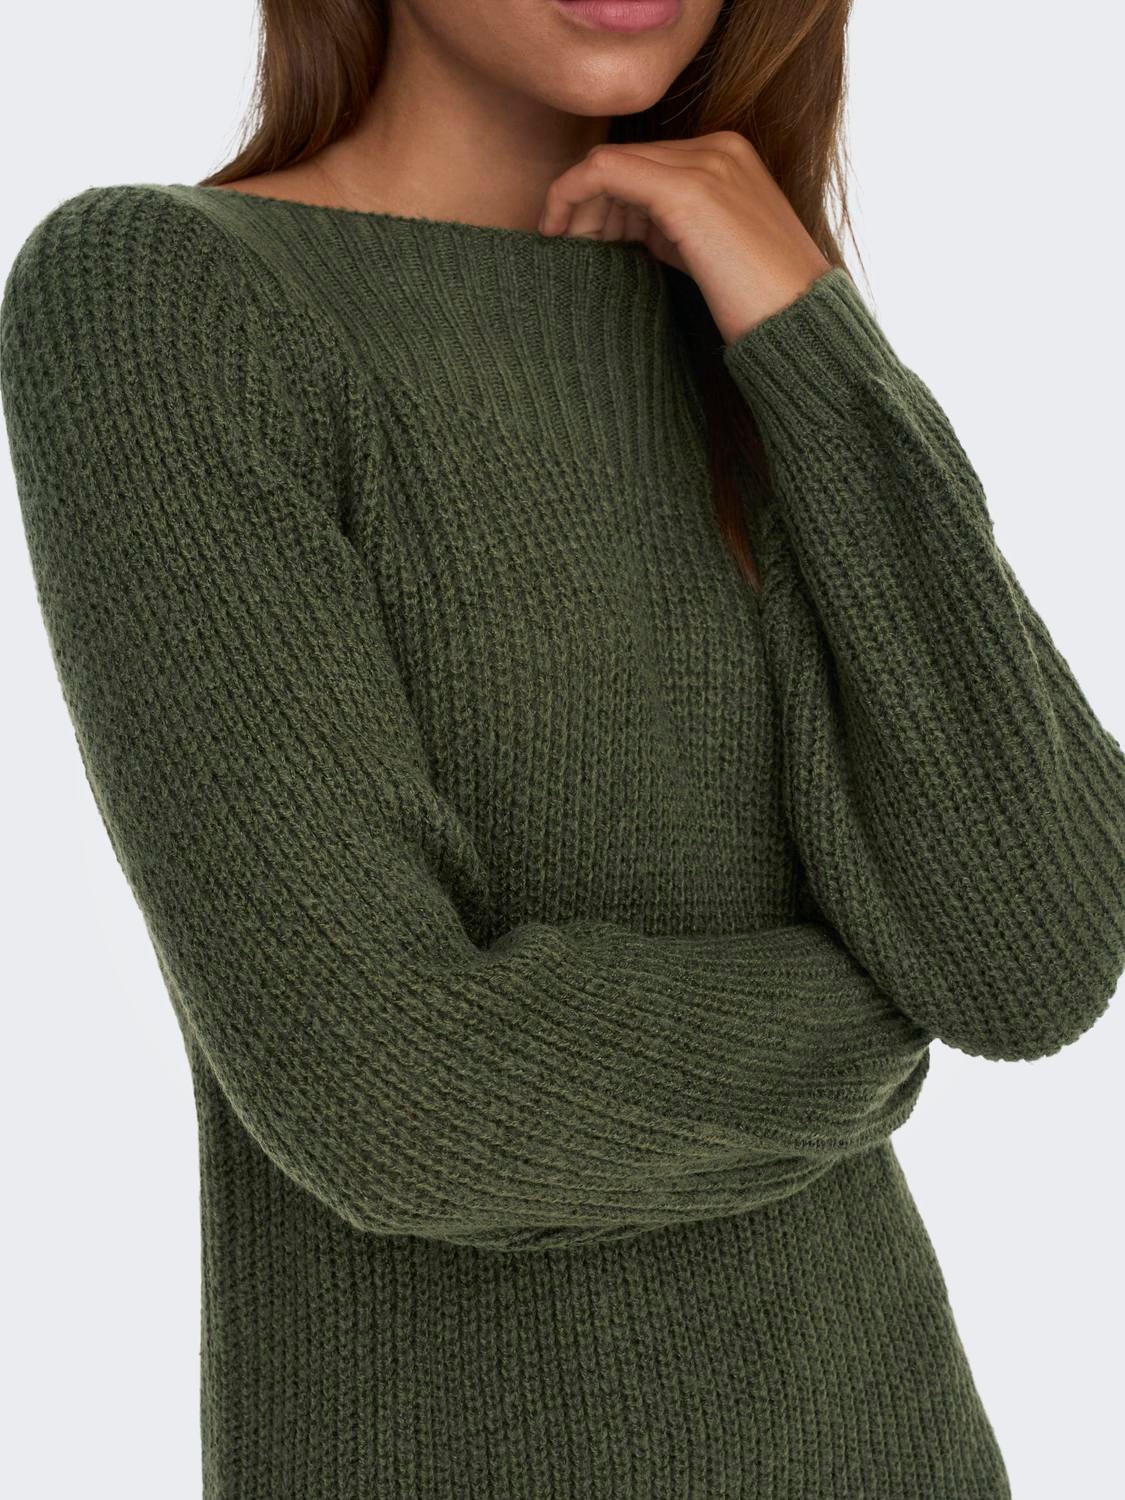 Mini knitted Green dress | Dark | ONLY®